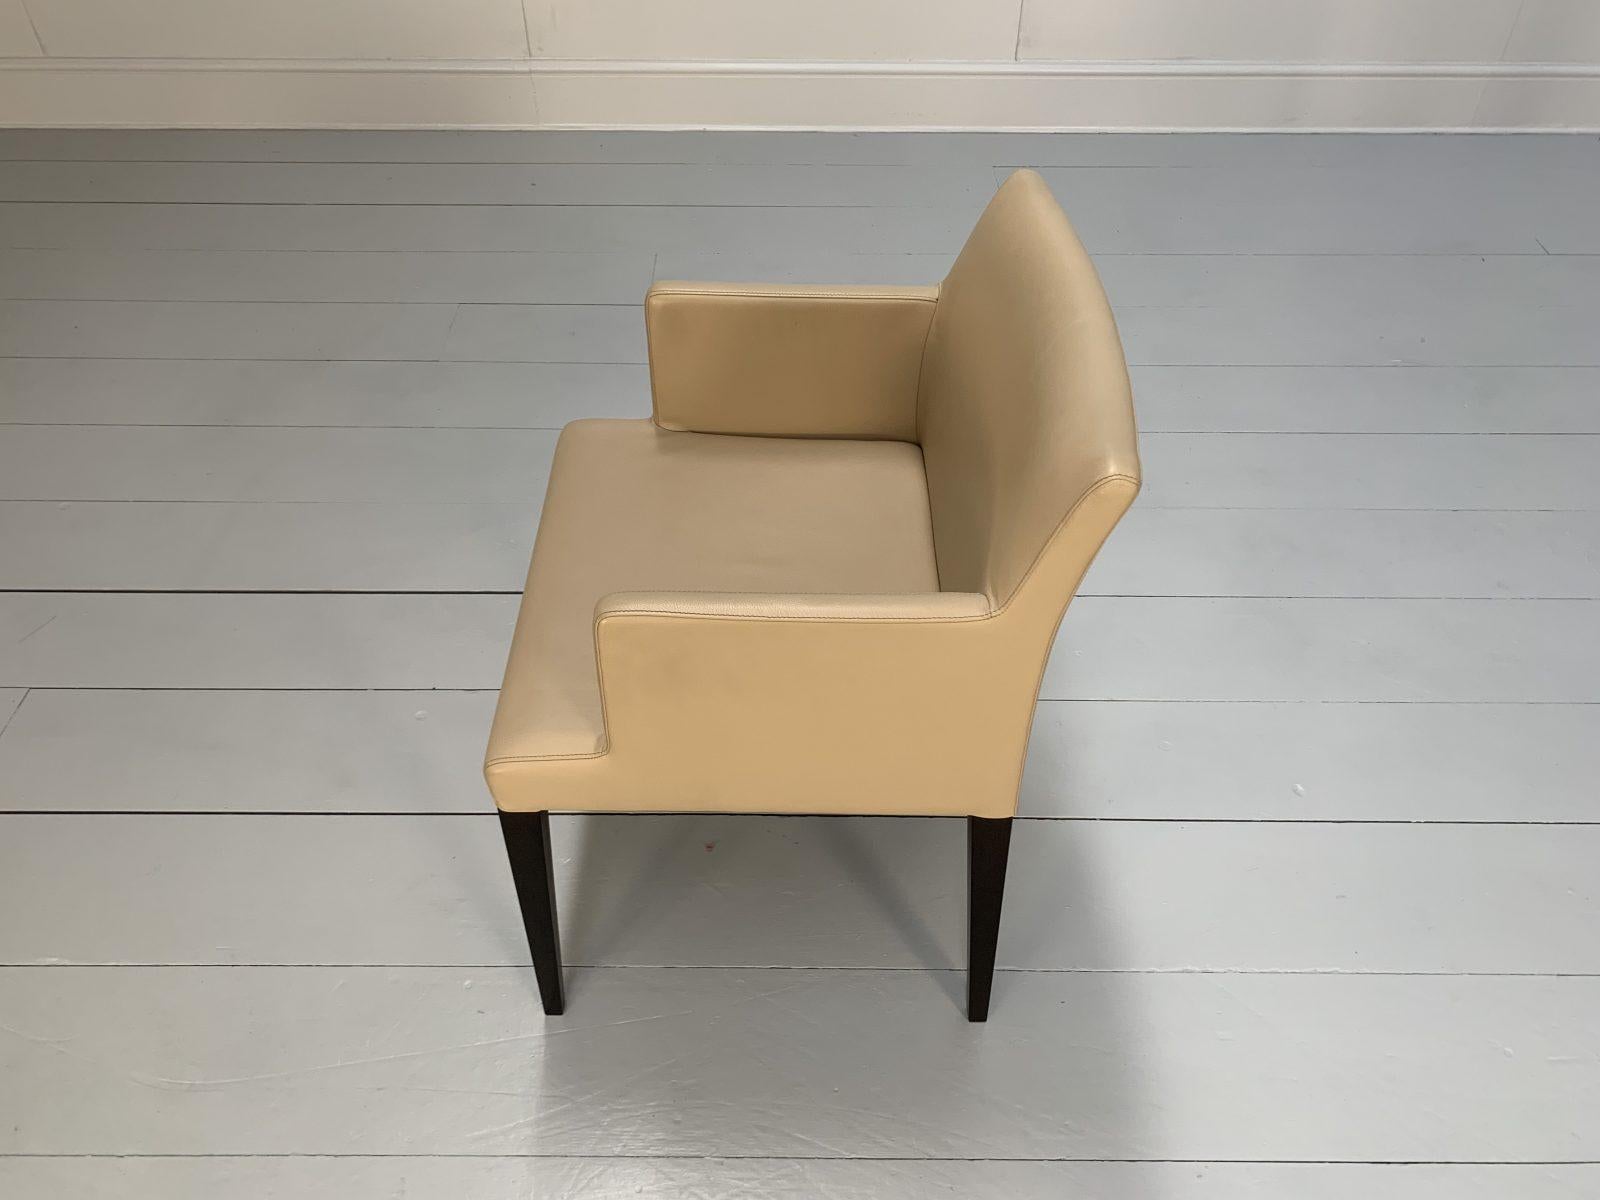 Suite of 6 Poltrona Frau “Liz B” Dining Chairs – In Brown “Pelle Frau” Leather 9